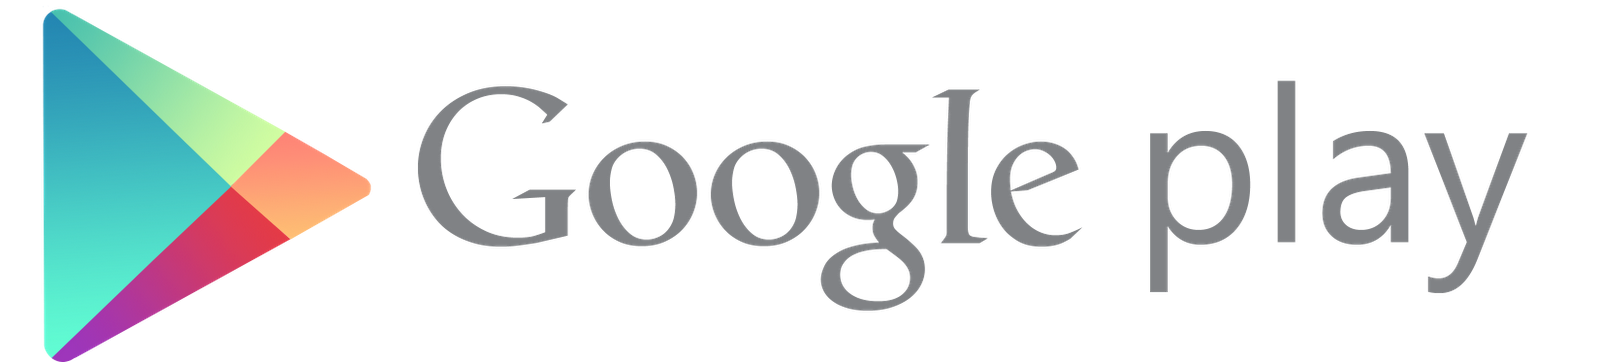 Google-Play-logo-3300x746-transparent